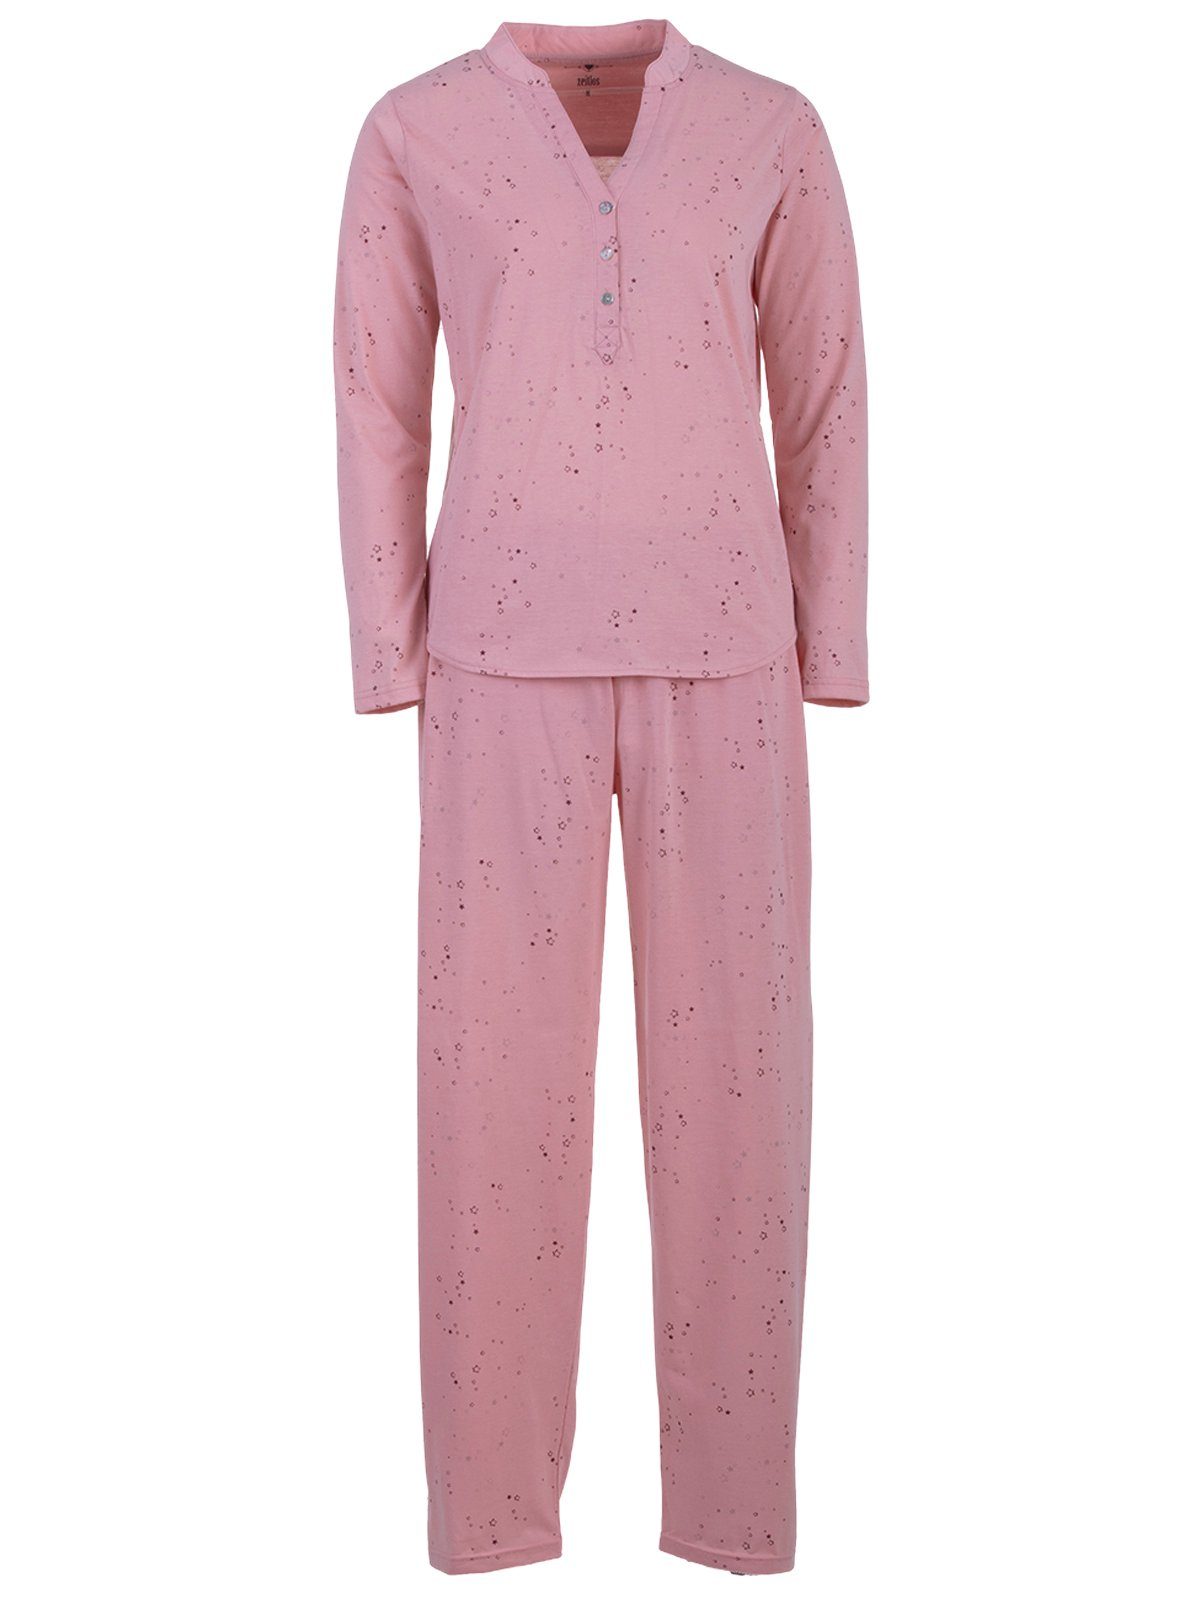 zeitlos Schlafanzug Pyjama Set Langarm - Sterne rosa